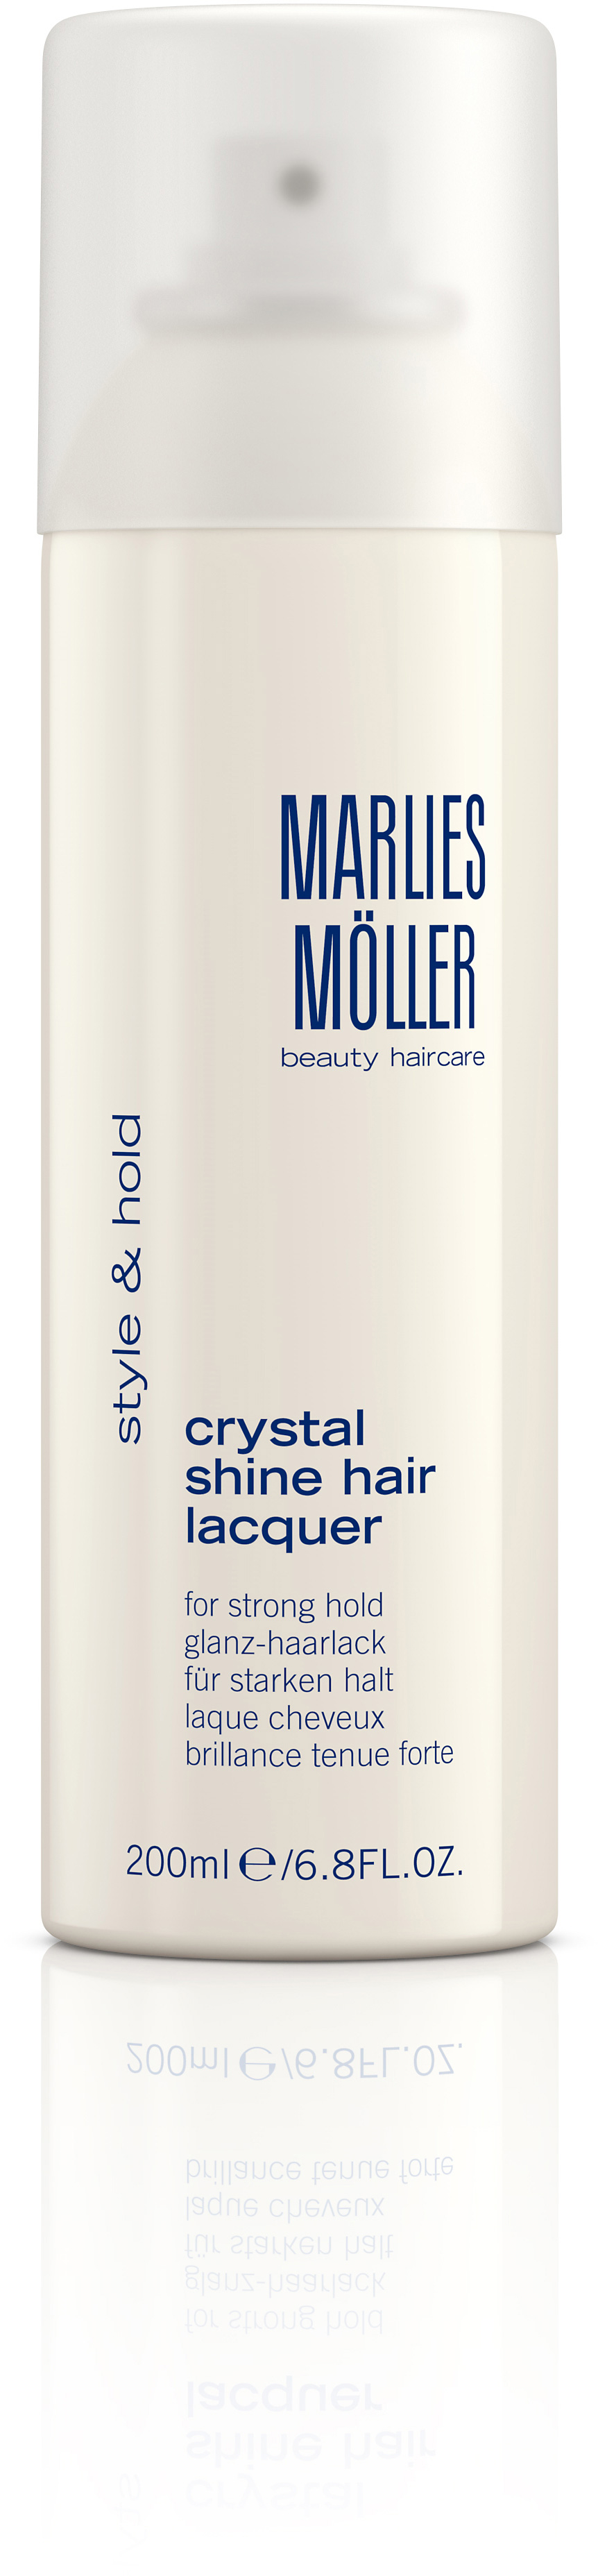 Marlies Möller Style Crys Sh Hair Lacquer 200 ml